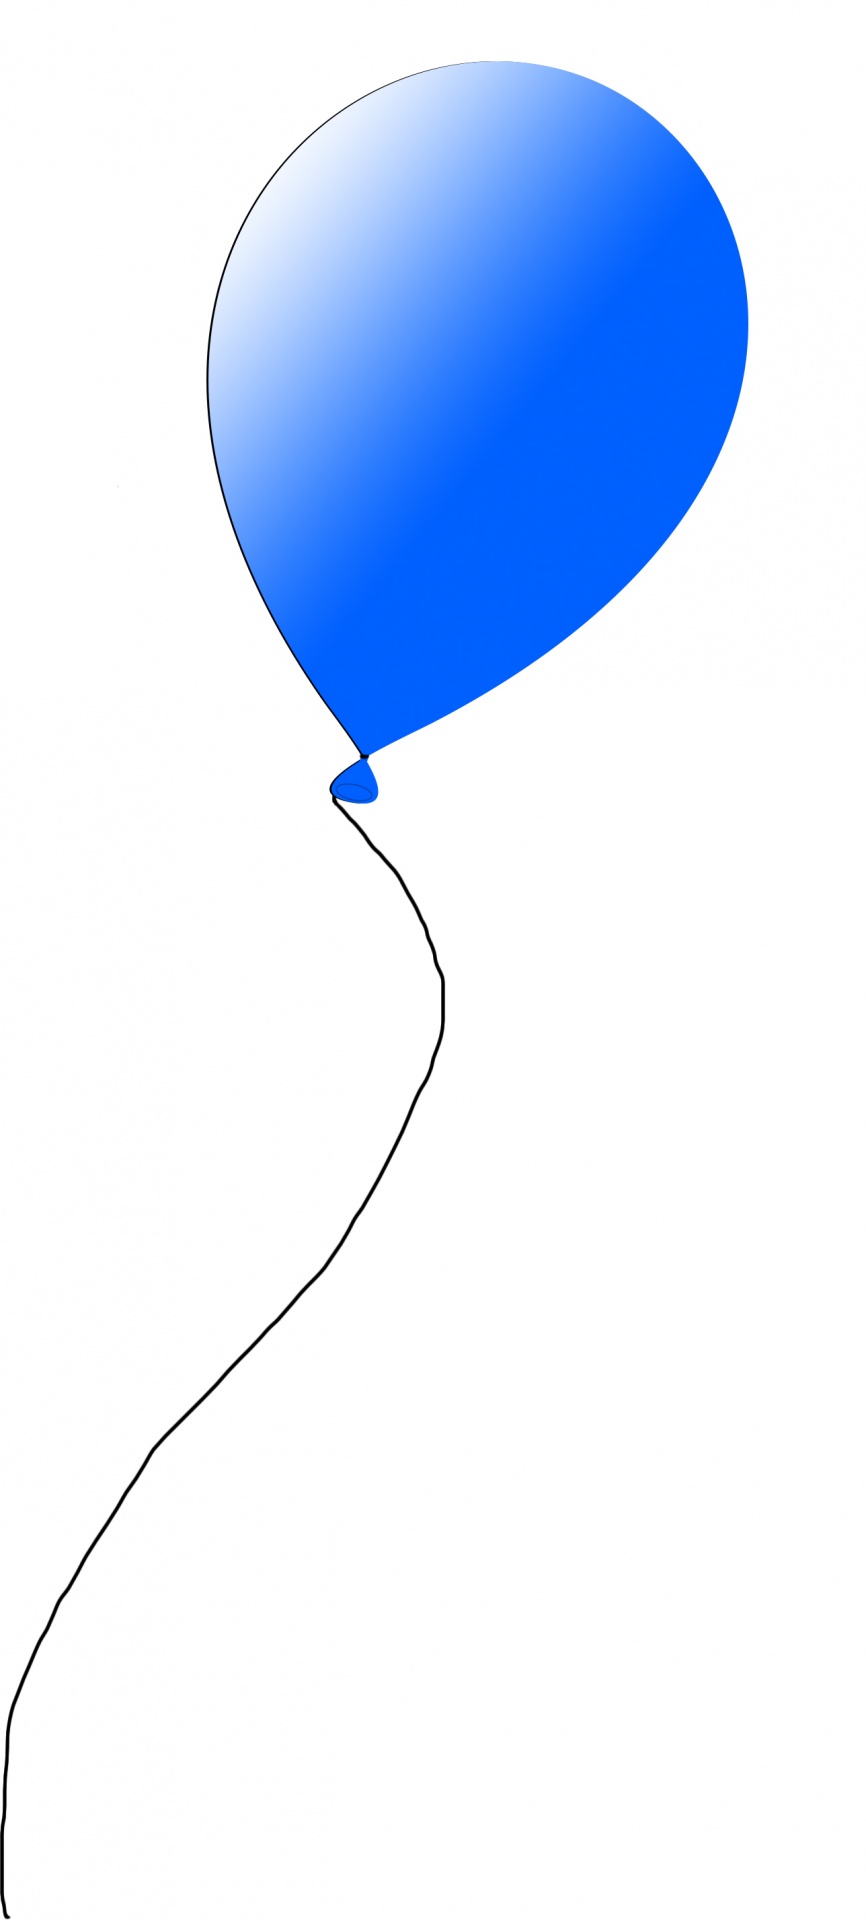 blue balloon blue balloon free photo